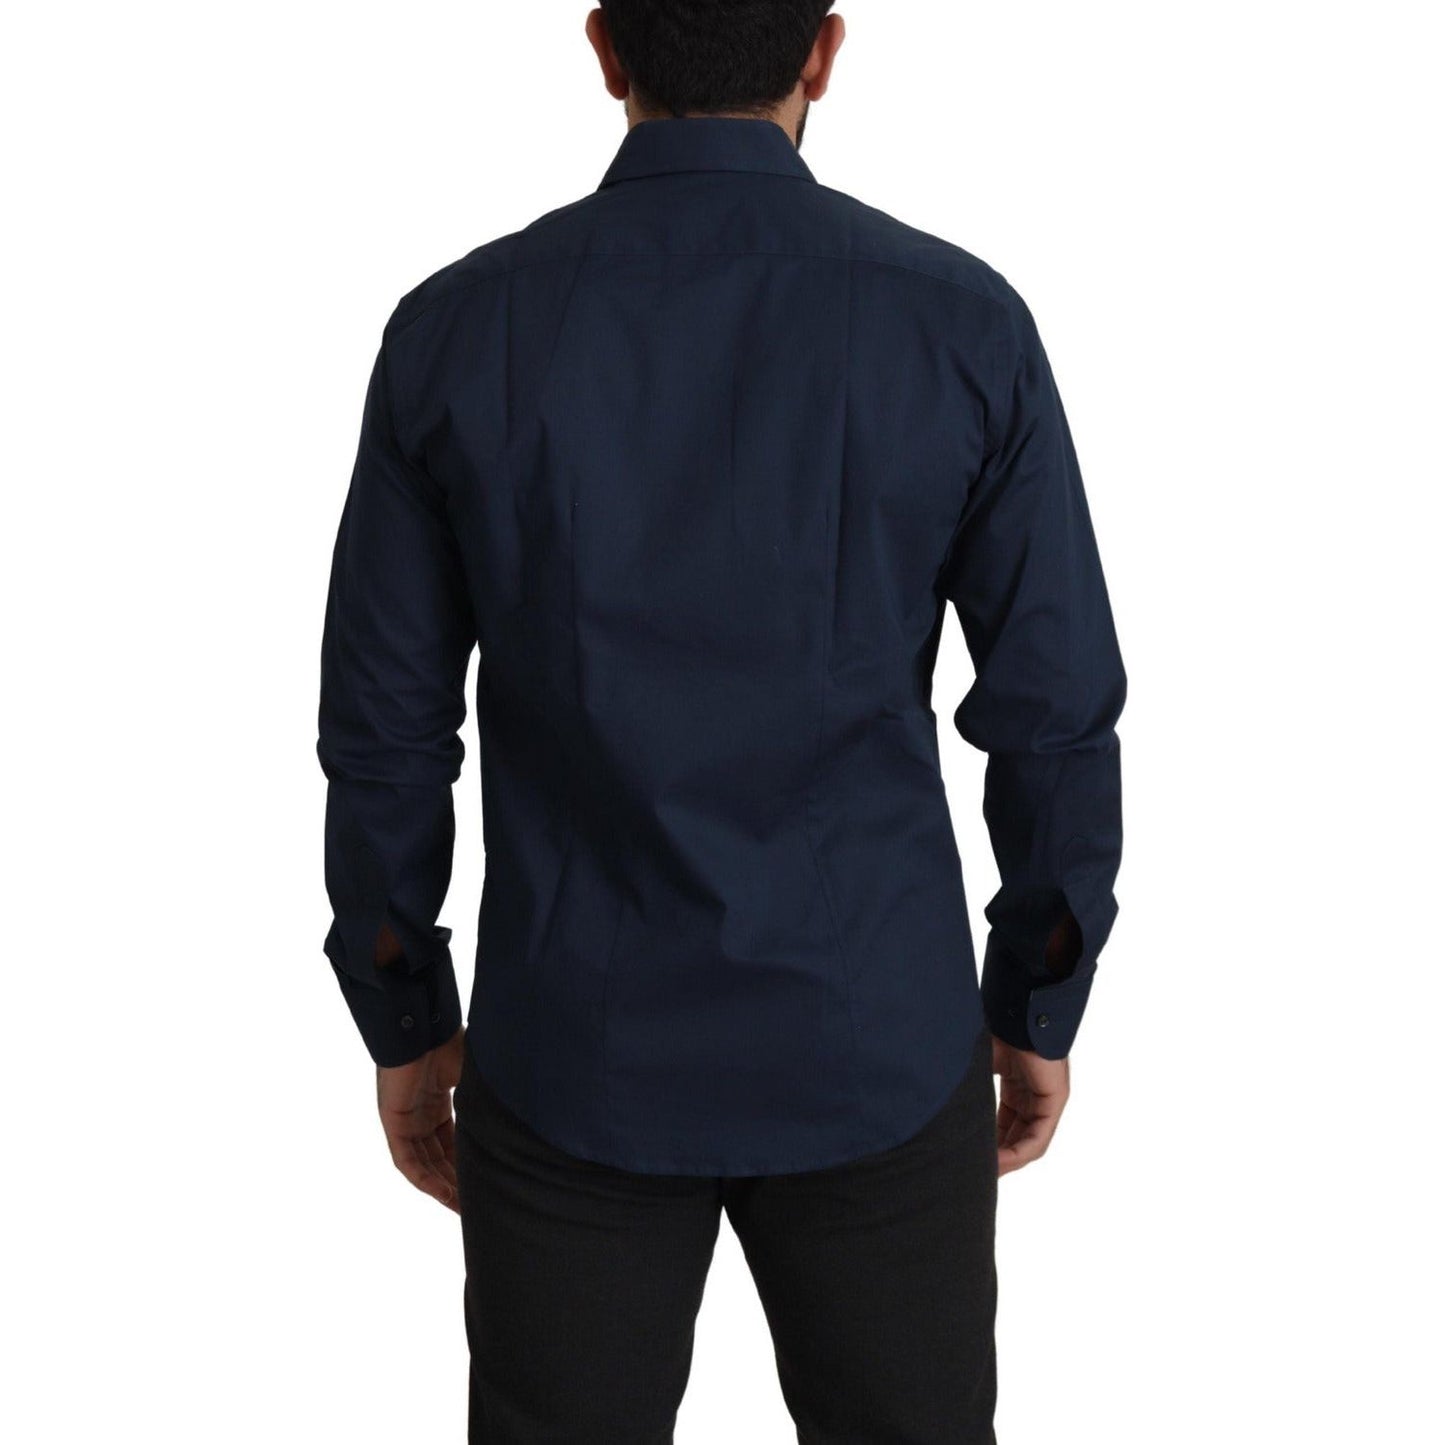 Roberto Cavalli Navy Elegance Cotton Dress Shirt navy-blue-cotton-dress-formal-shirt IMG_2048-scaled-8f758981-045.jpg